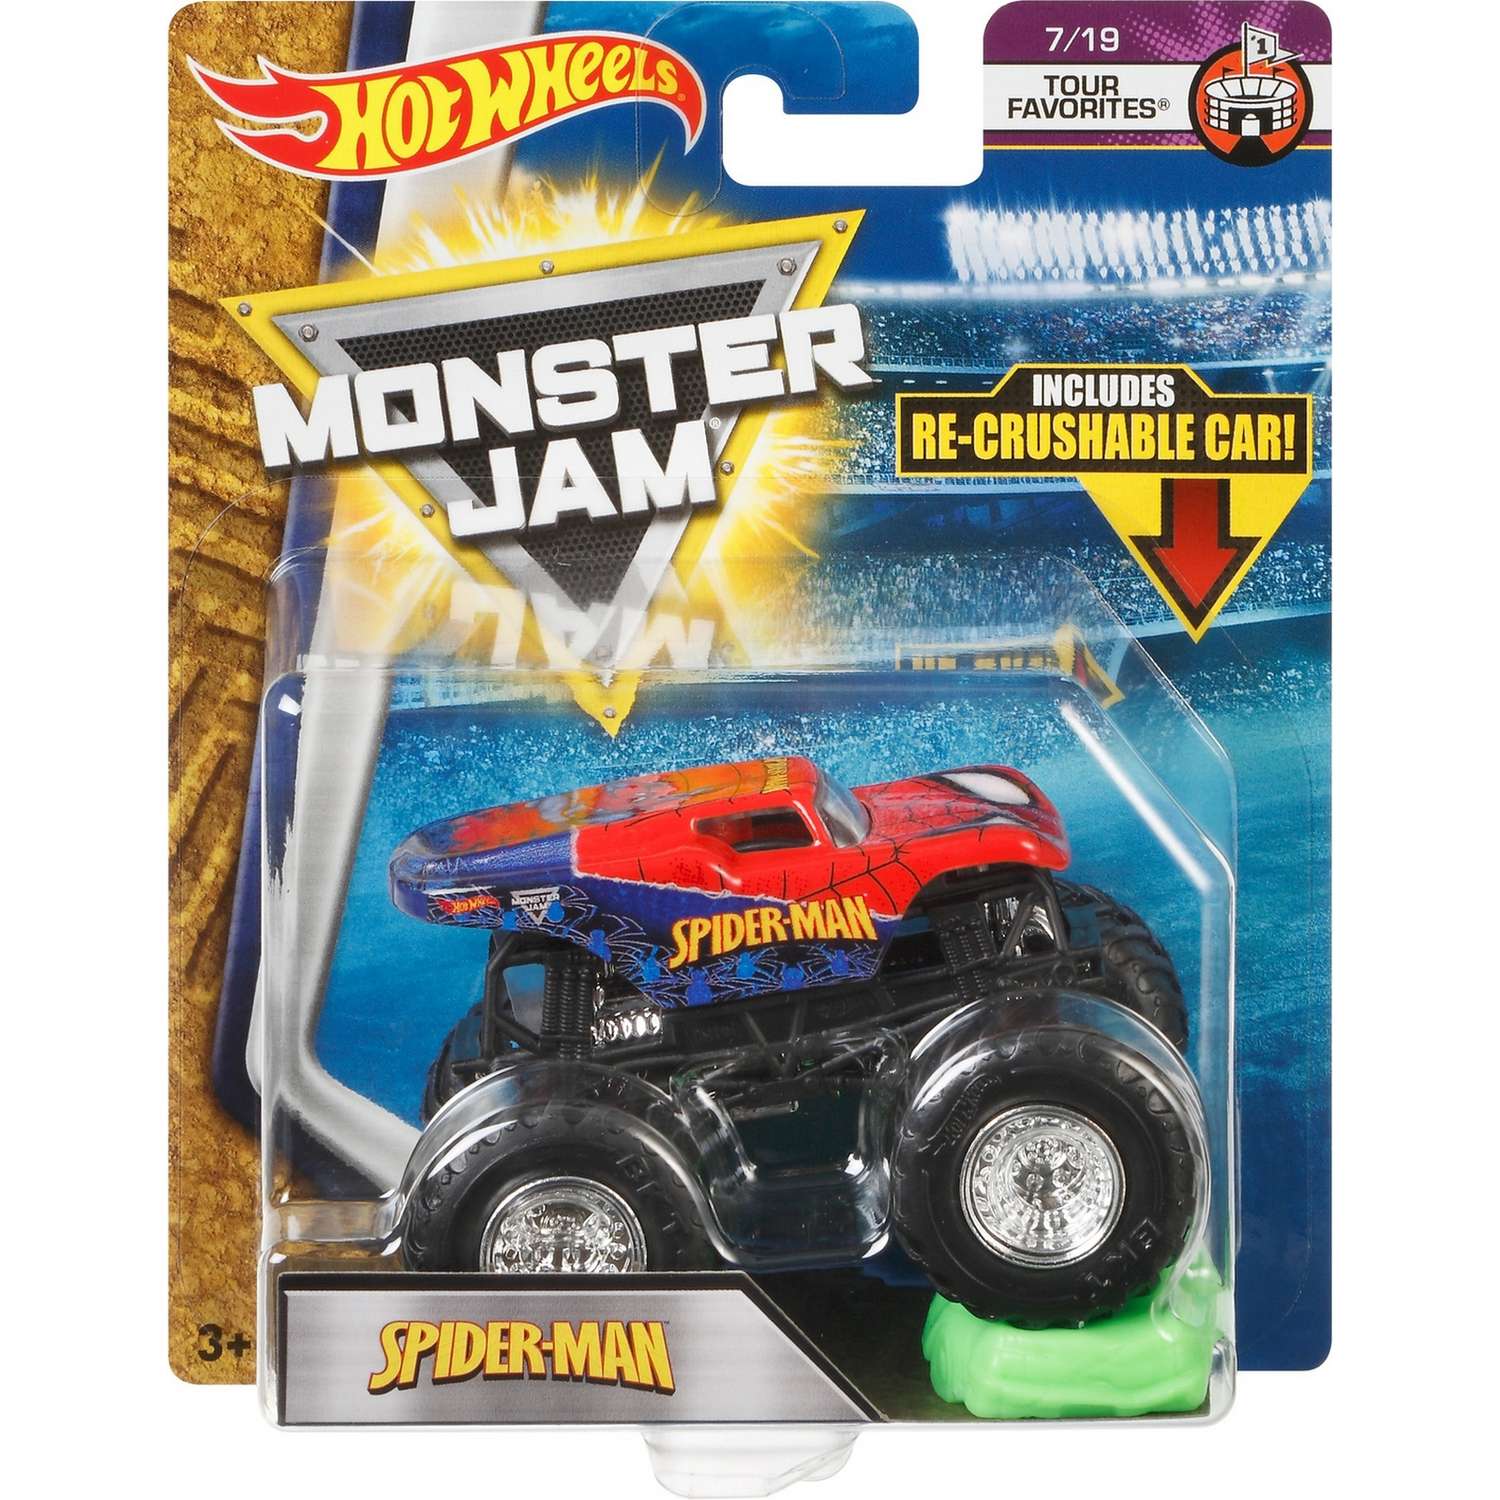 Машина Hot Wheels Monster Jam 1:64 Tour Favorites Человек-паук FLX35 21572 - фото 2